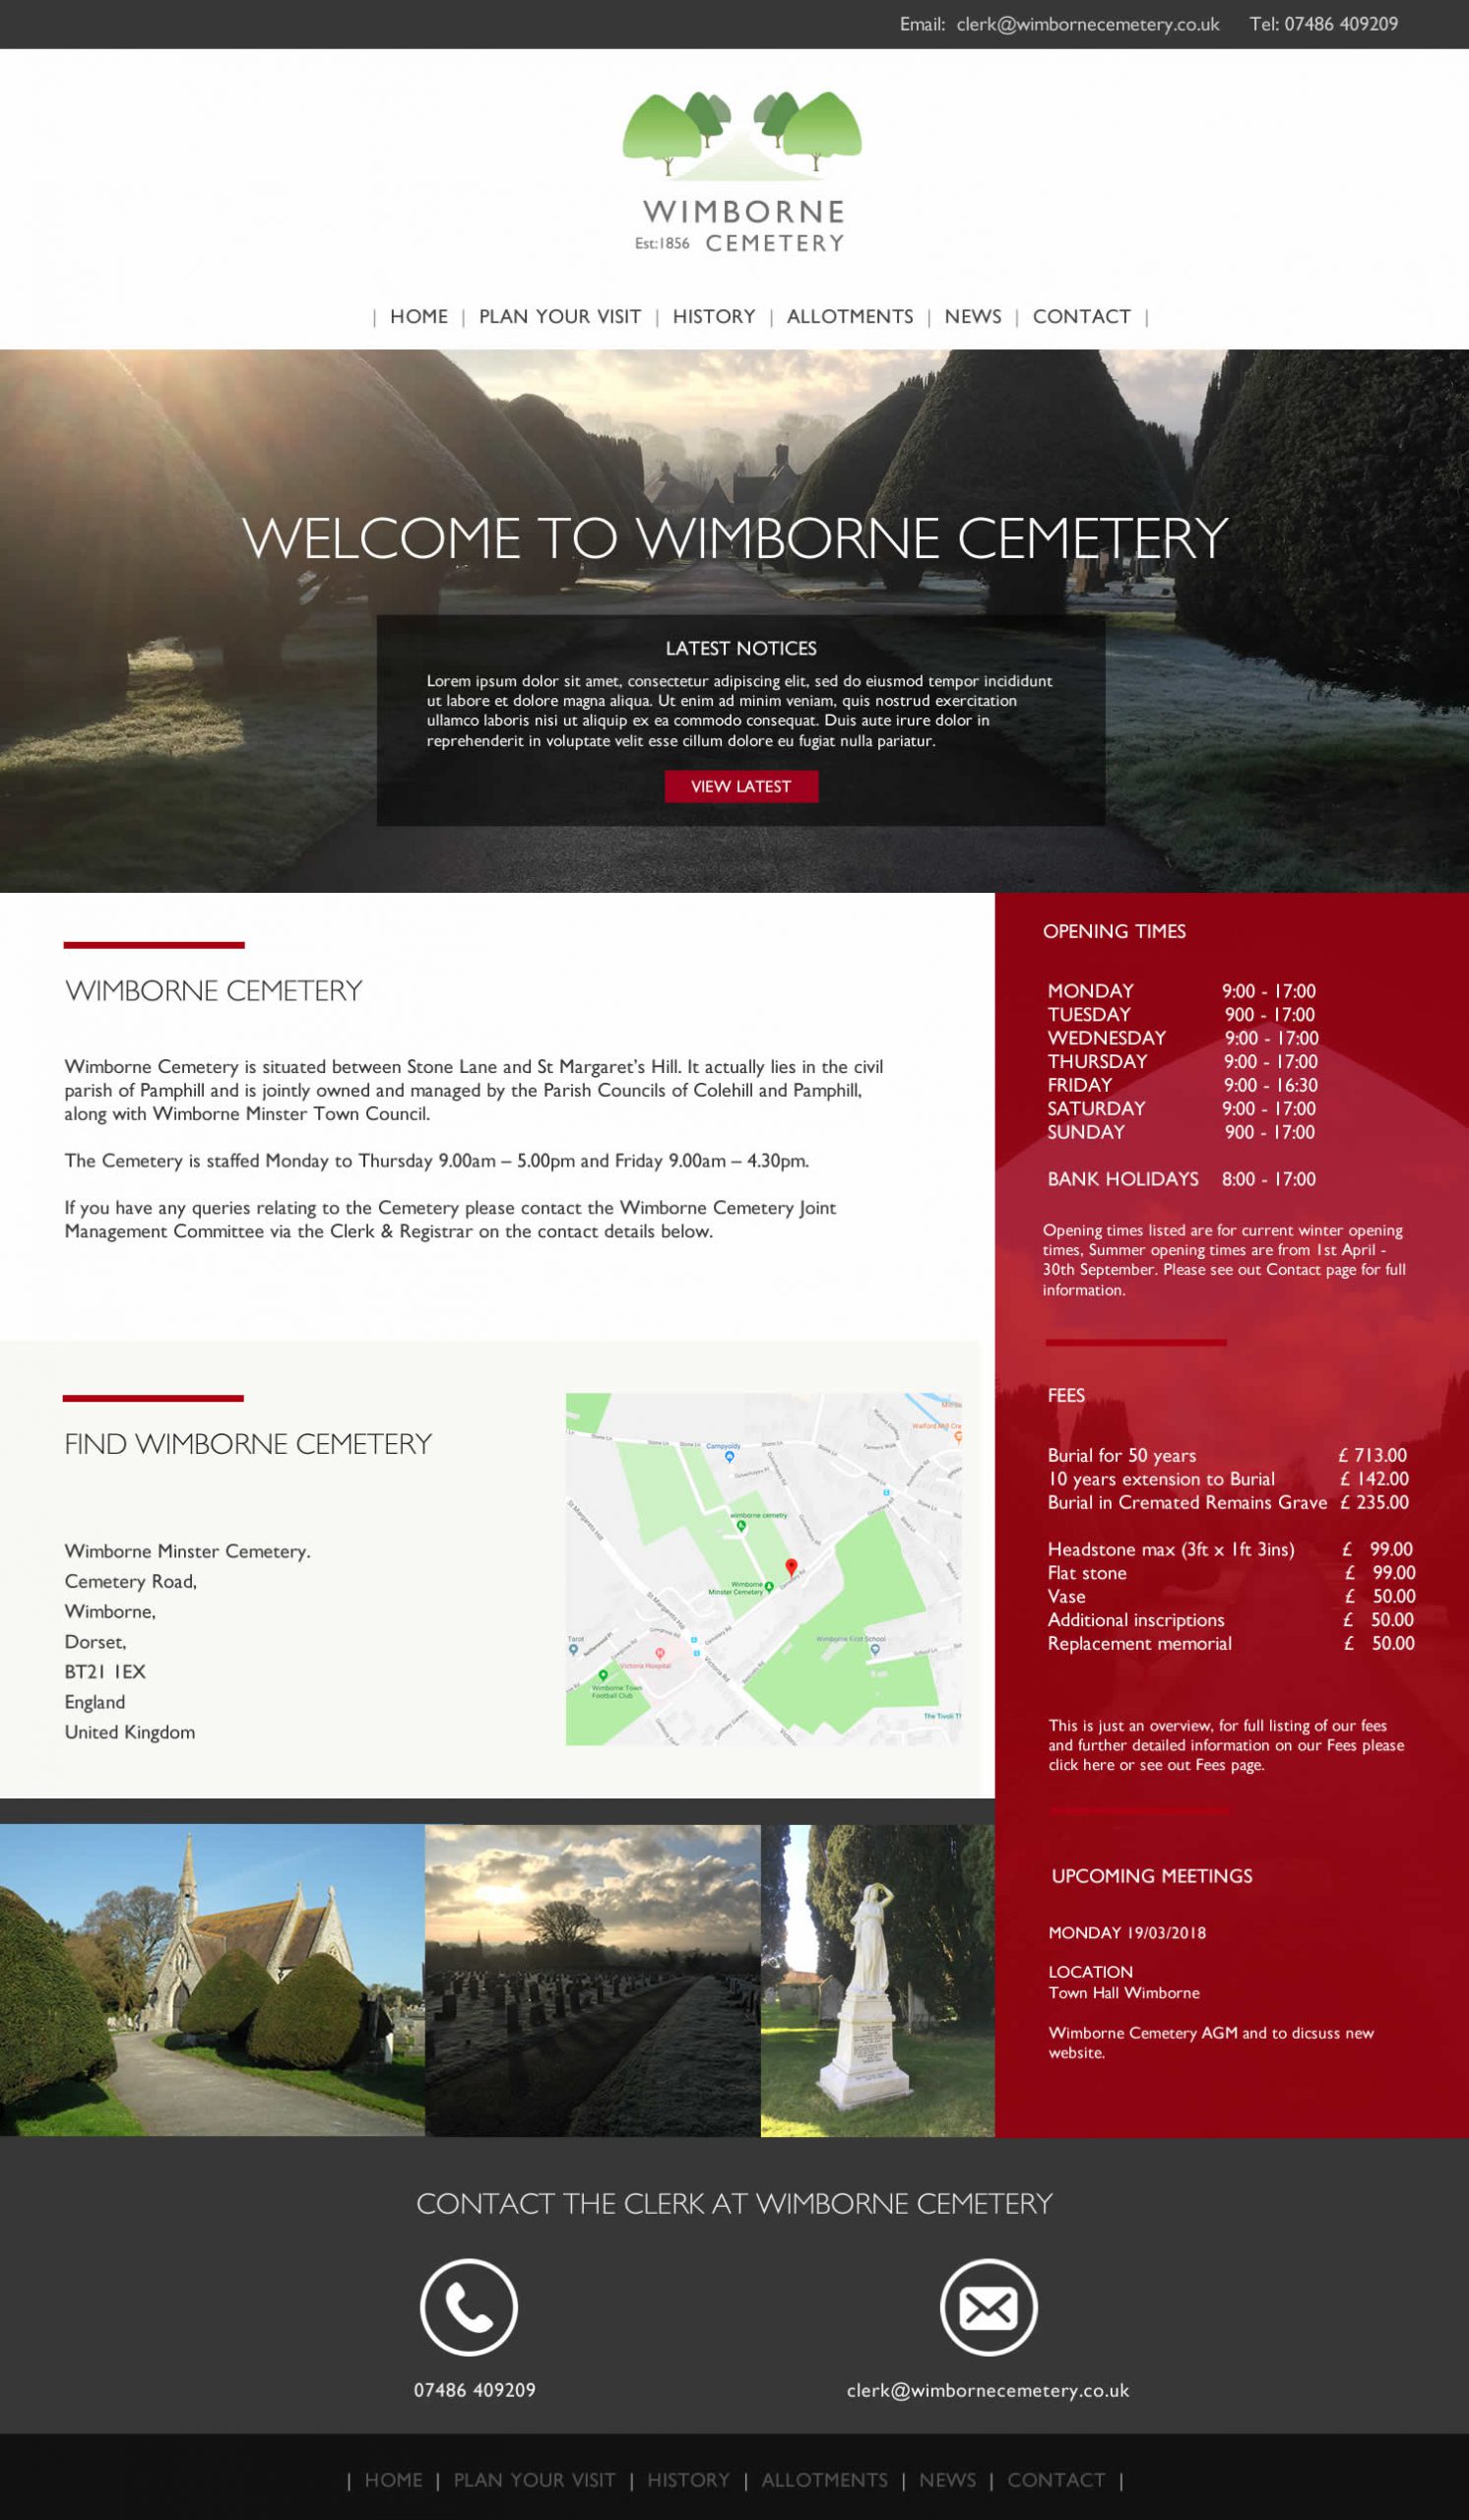 Wimborne Cemetery website layout design